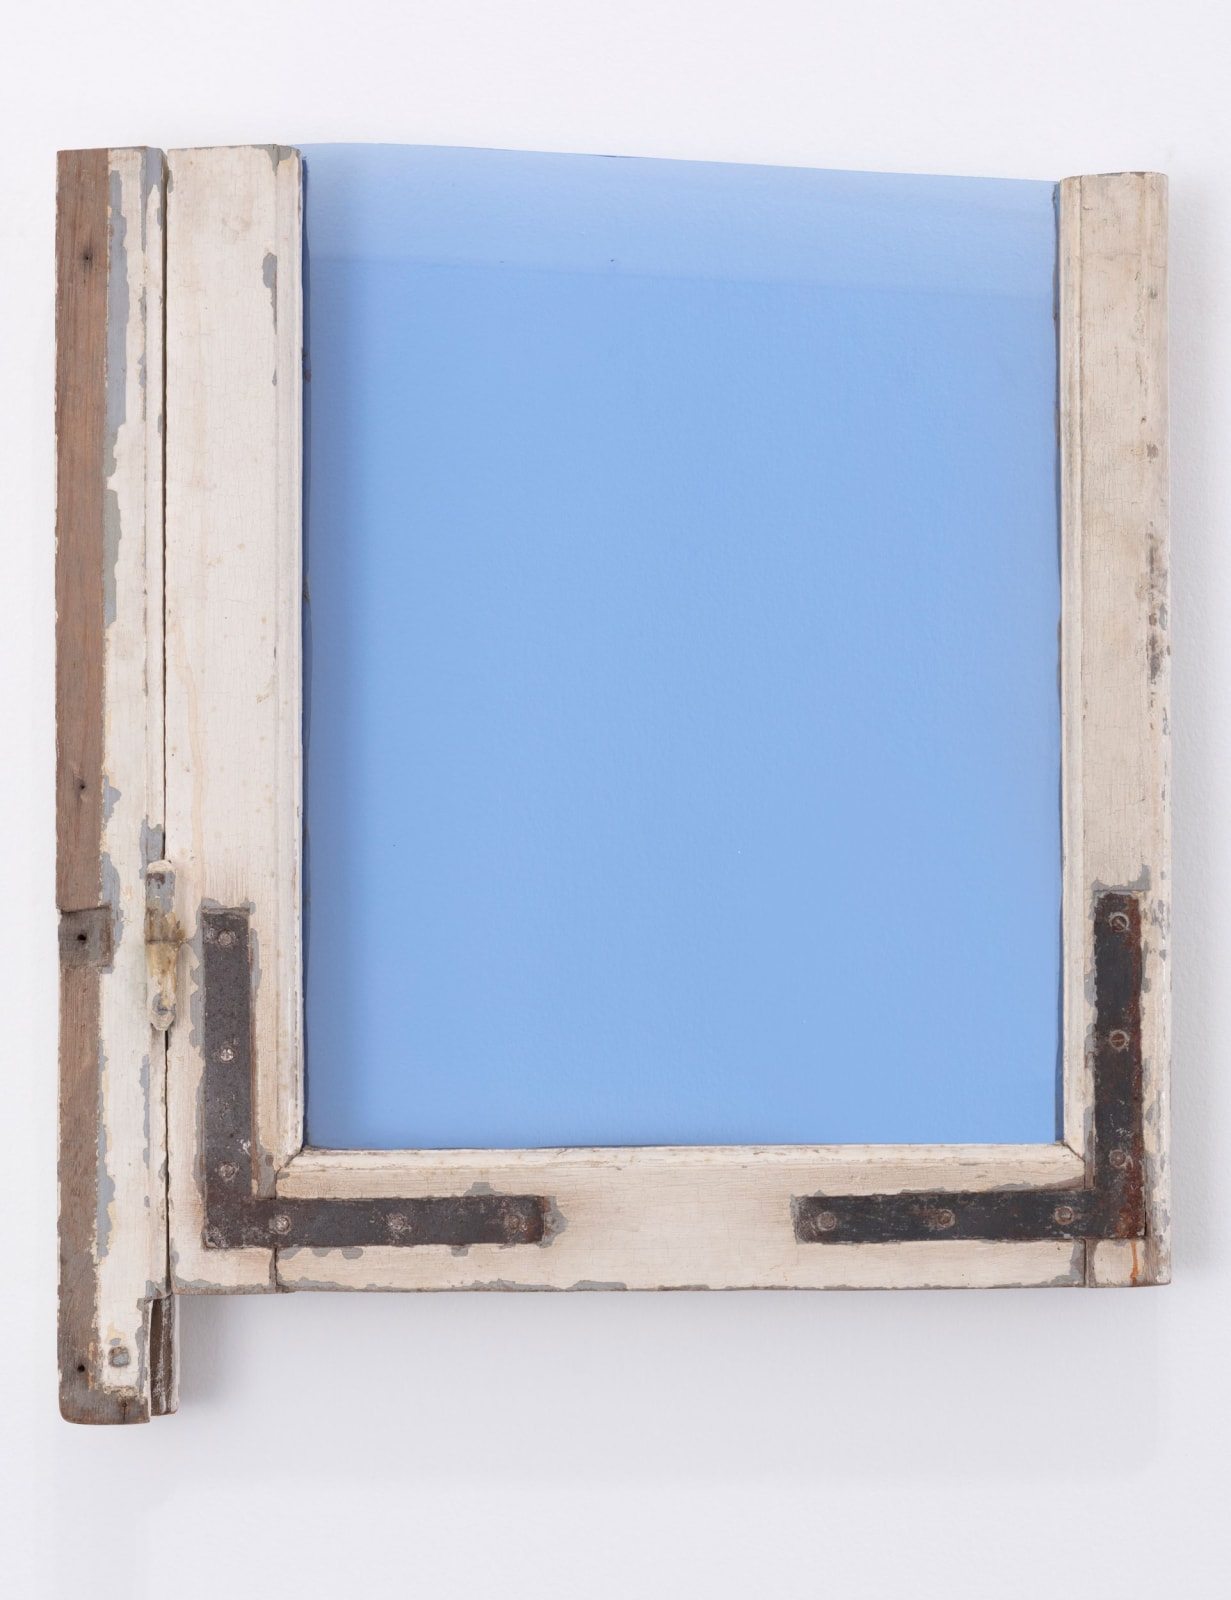 Pierre Buraglio Fenêtre, 1988-2009 Window element, glass 65 x 52 cm (25 19/32 x 20 15/32 in)